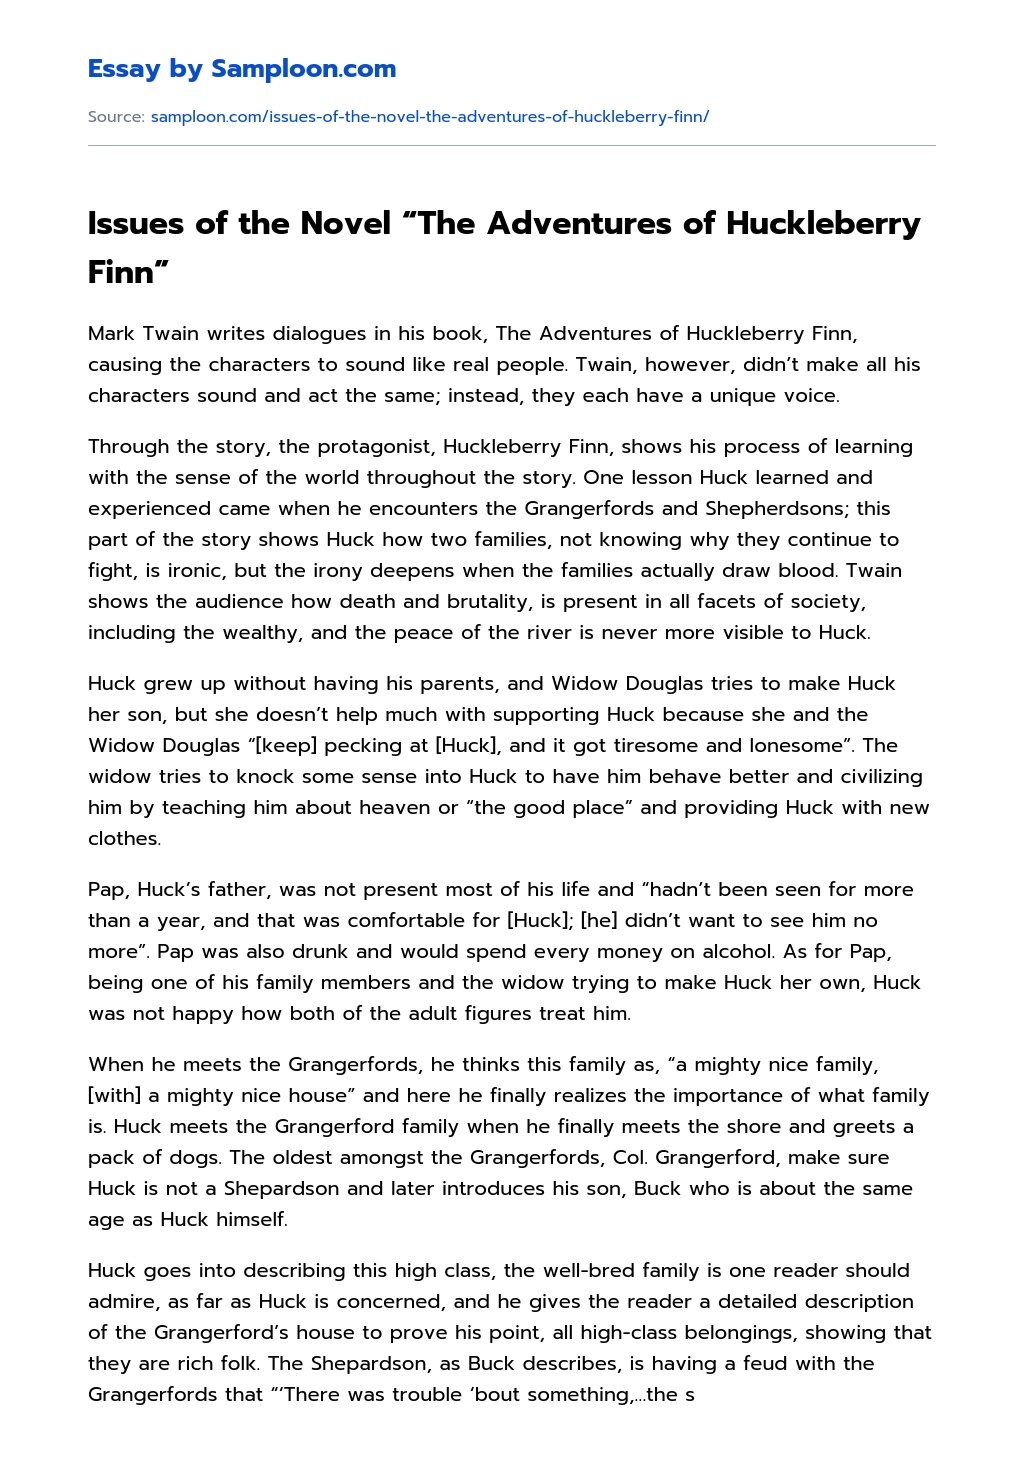 Issues of the Novel “The Adventures of Huckleberry Finn” Summary essay